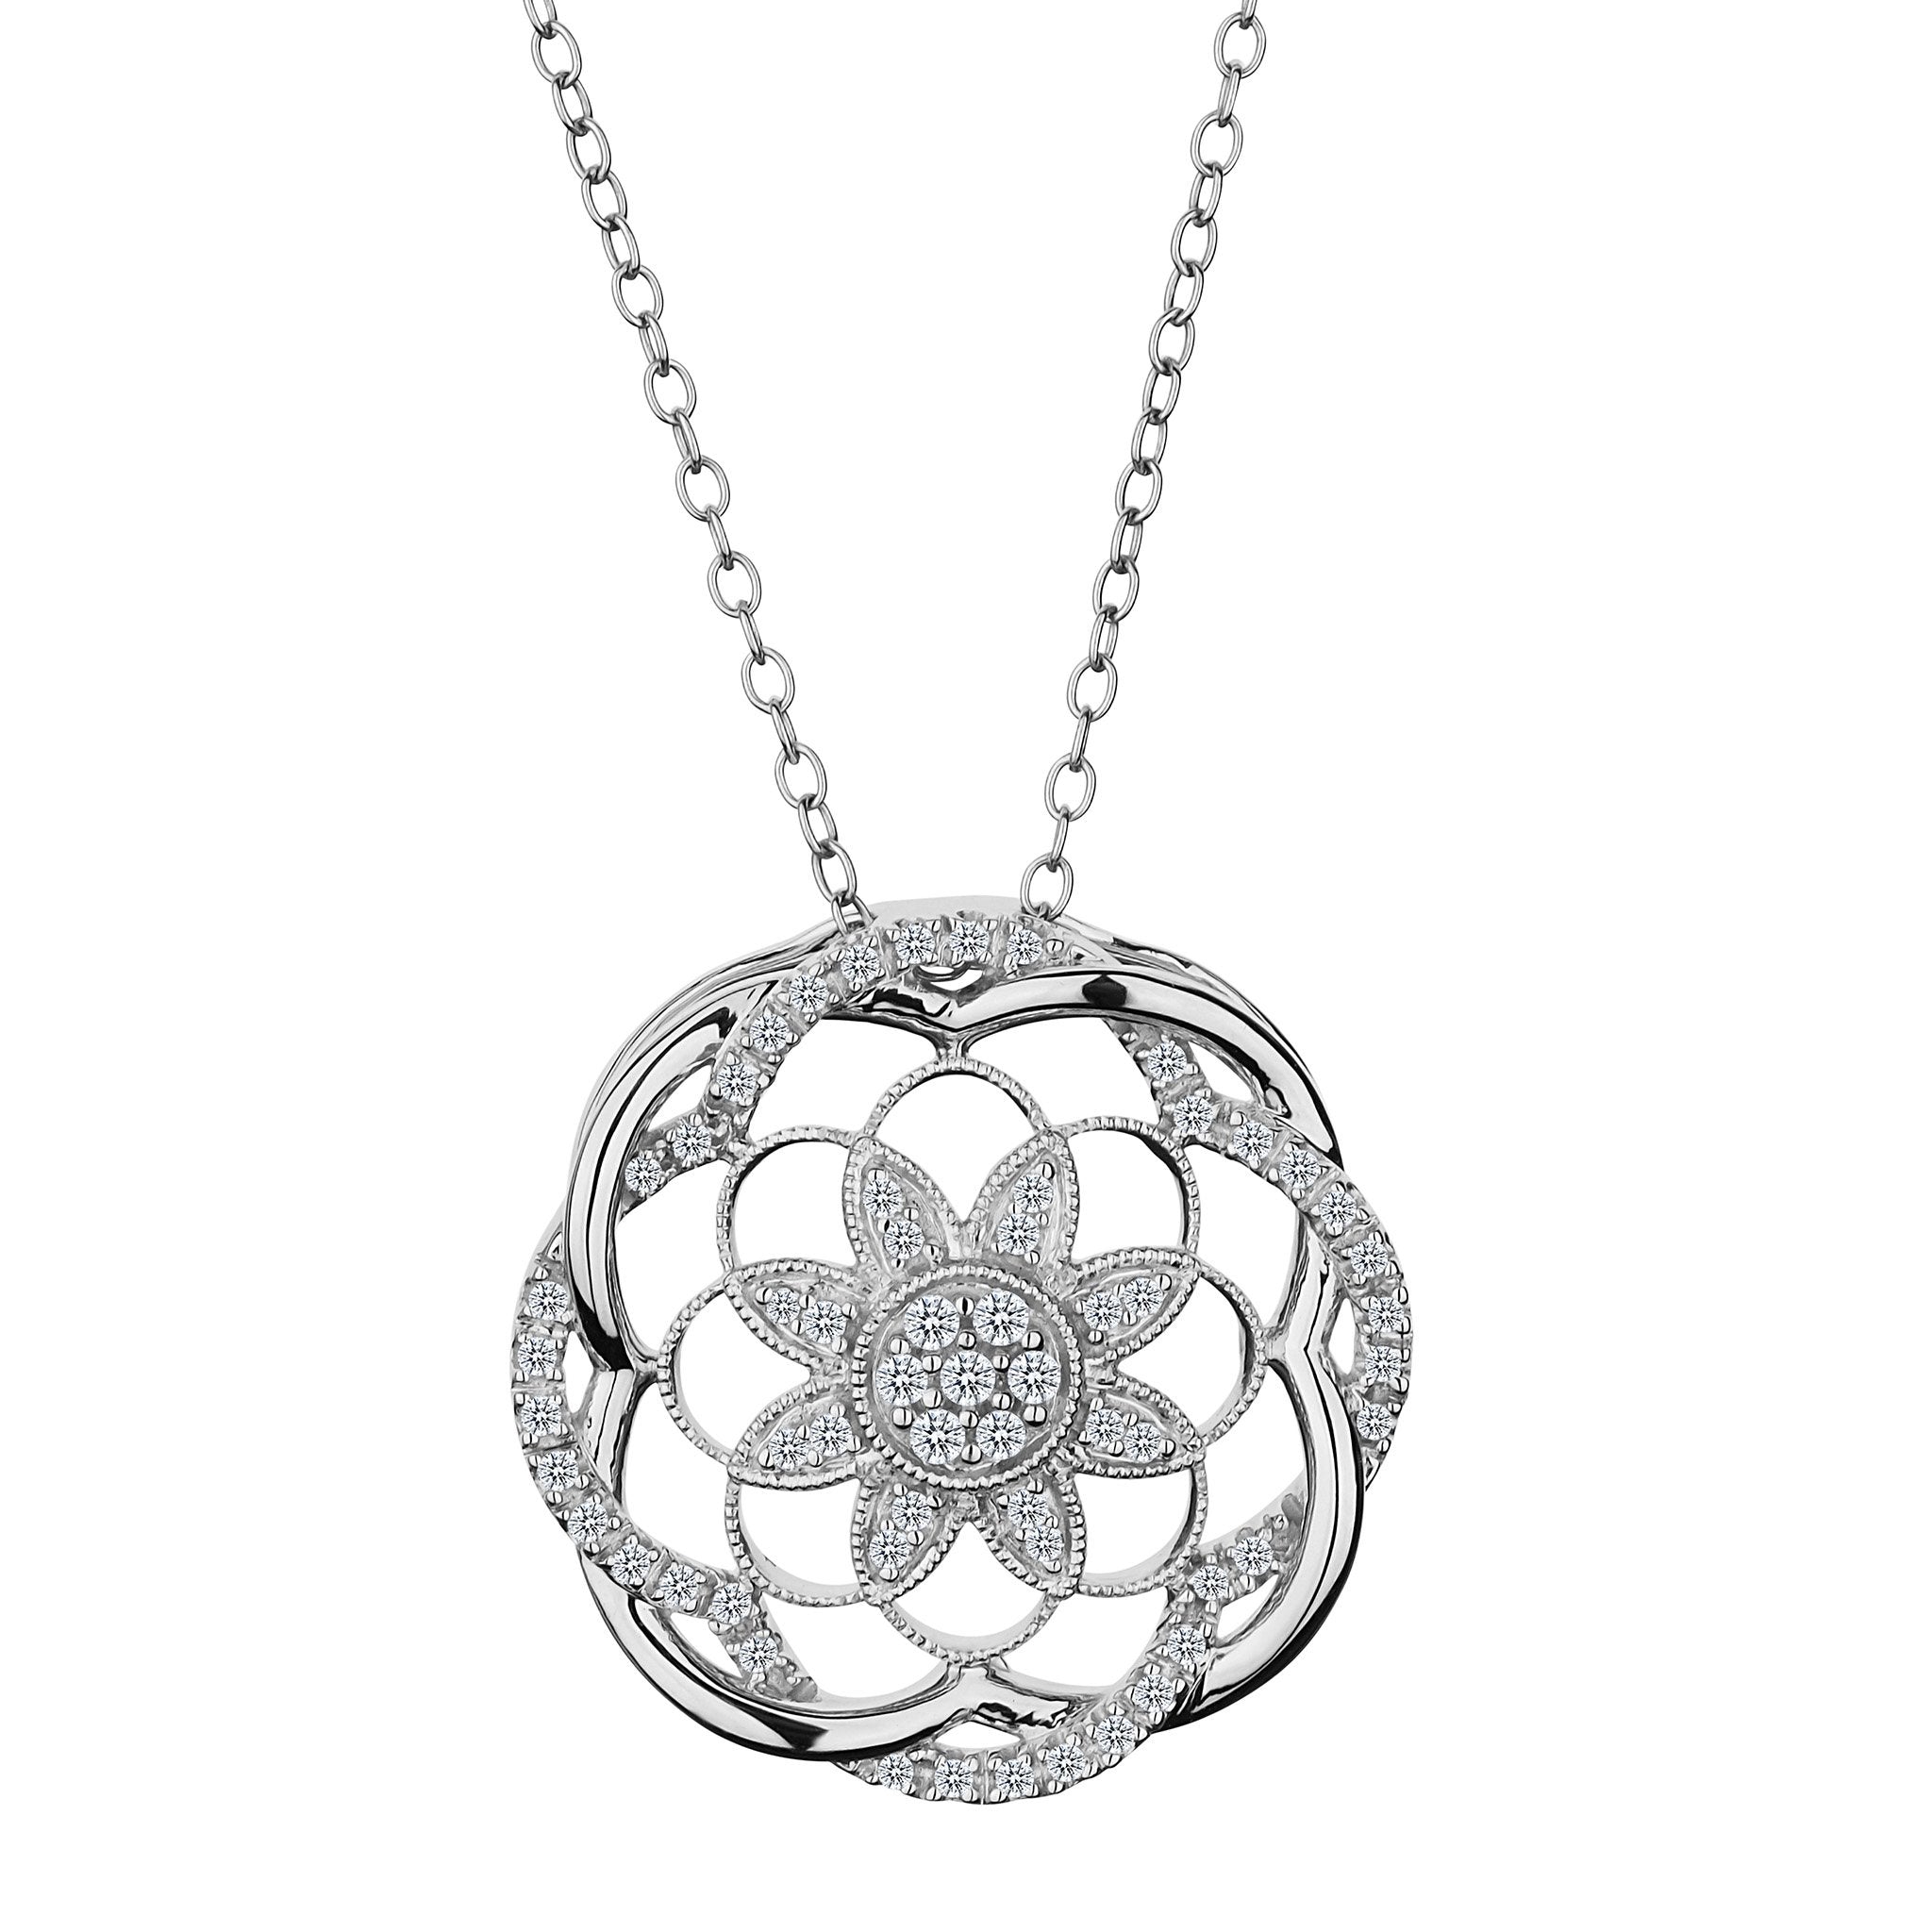 .20 Carat Diamond "Sunflower" Pendant,  10kt White Gold. Necklaces and Pendants. Griffin Jewellery Designs.